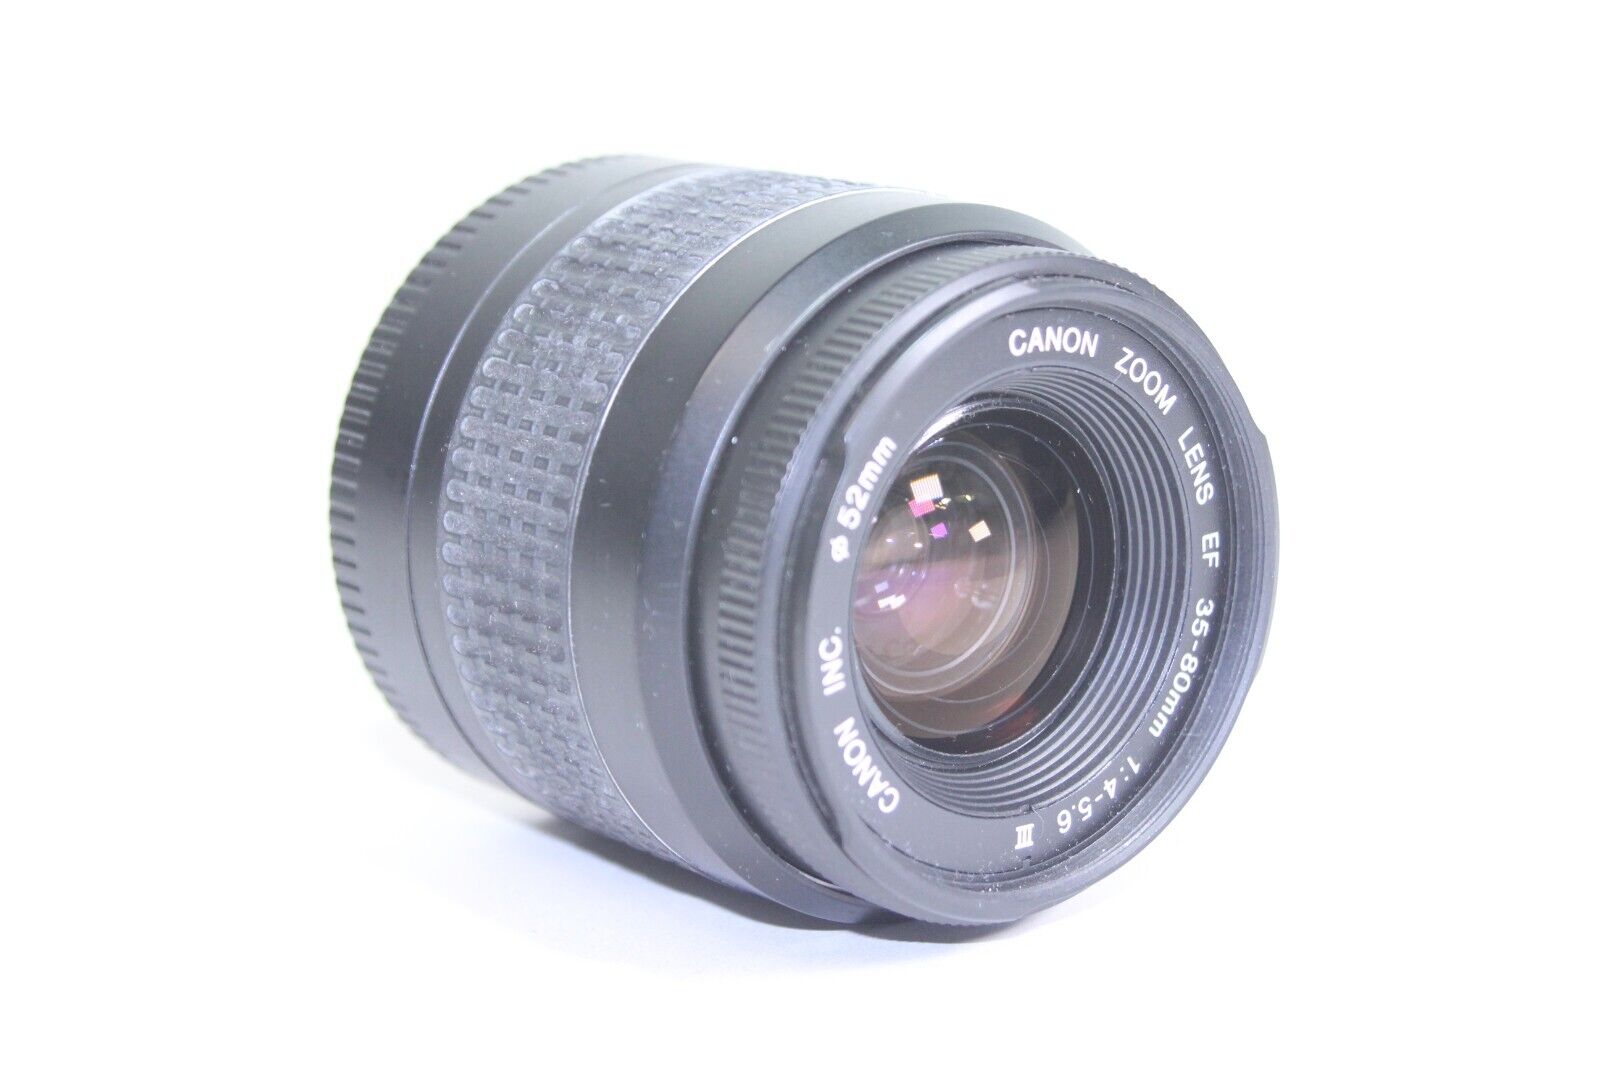 CANON Zoom Lens EF 35-80mm 1:4-5.6 III 52mm | eBay